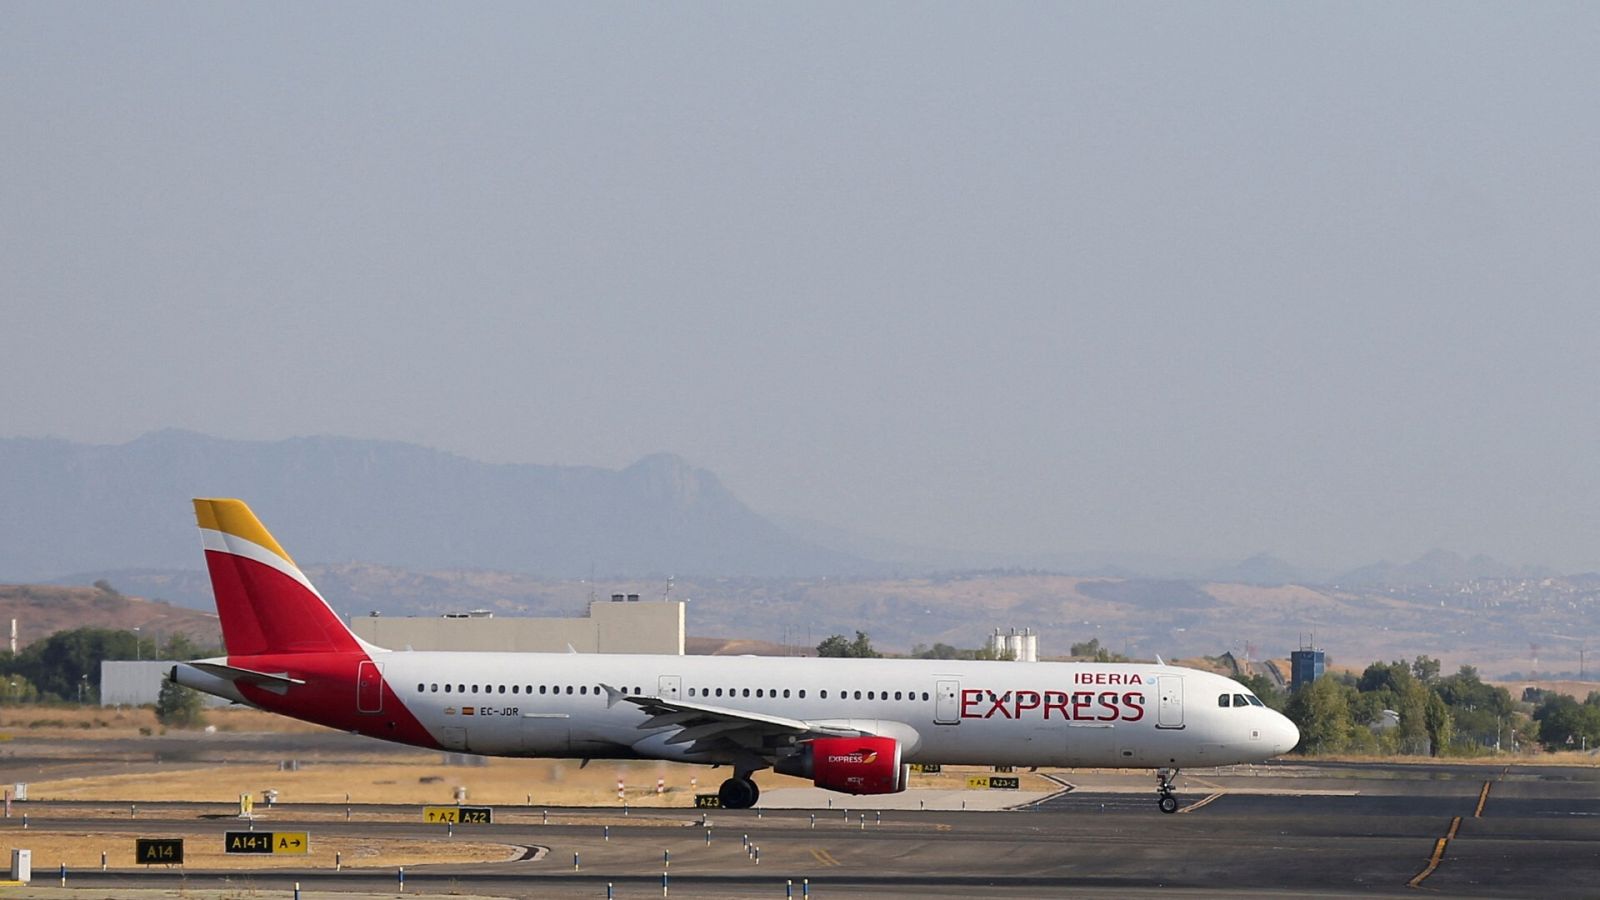 Imagen de un avión de Iberia Express